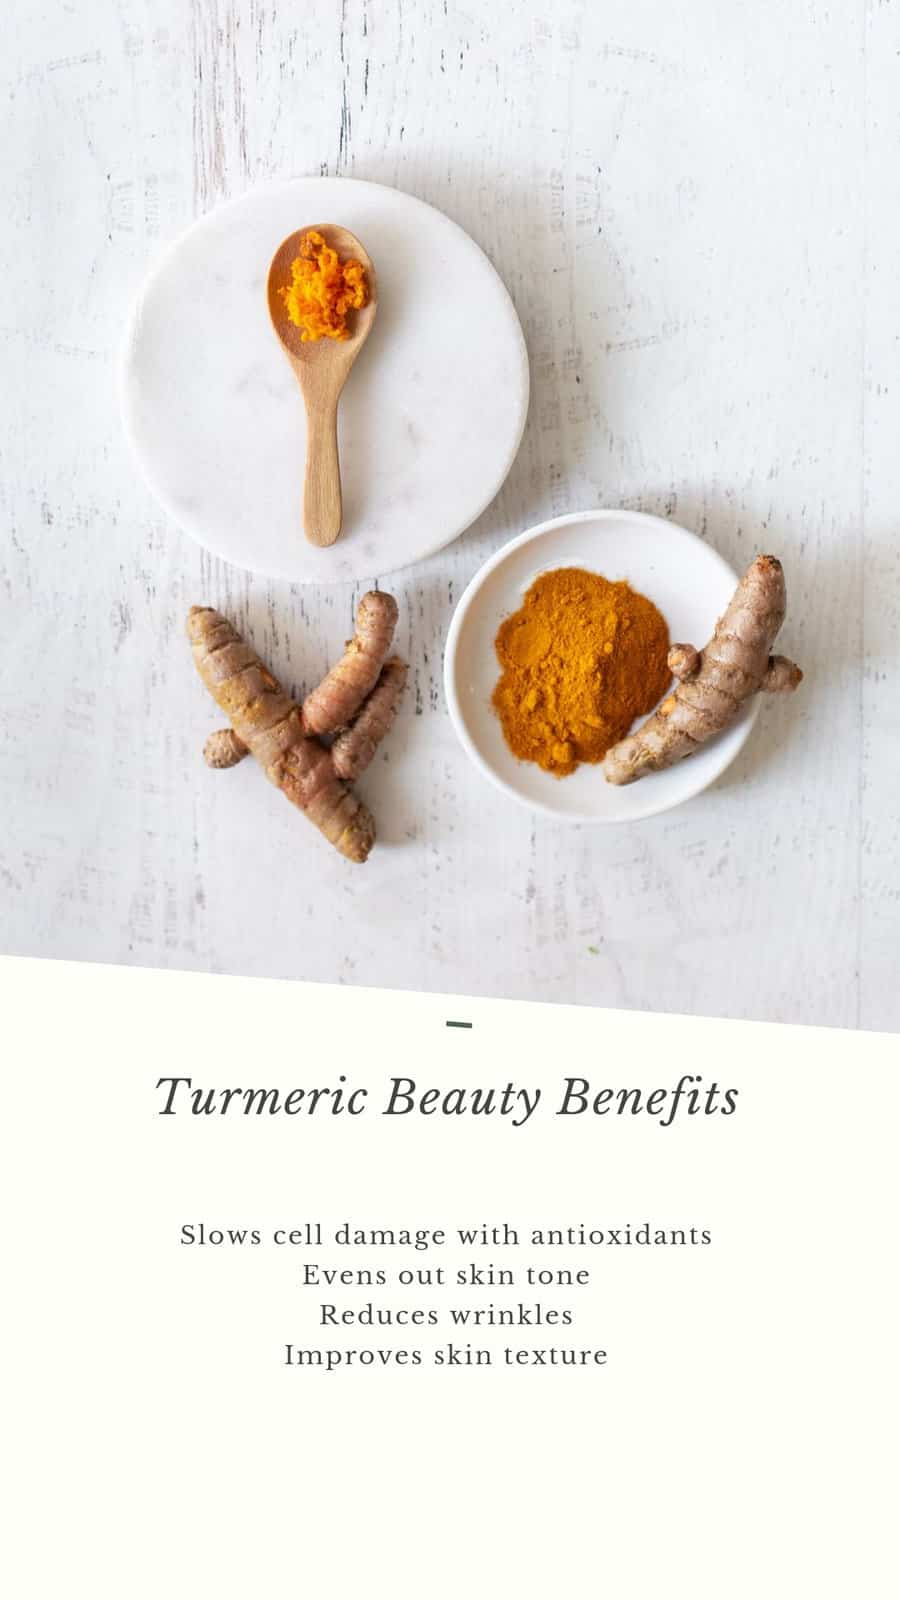 Turmeric Benefits for Skin